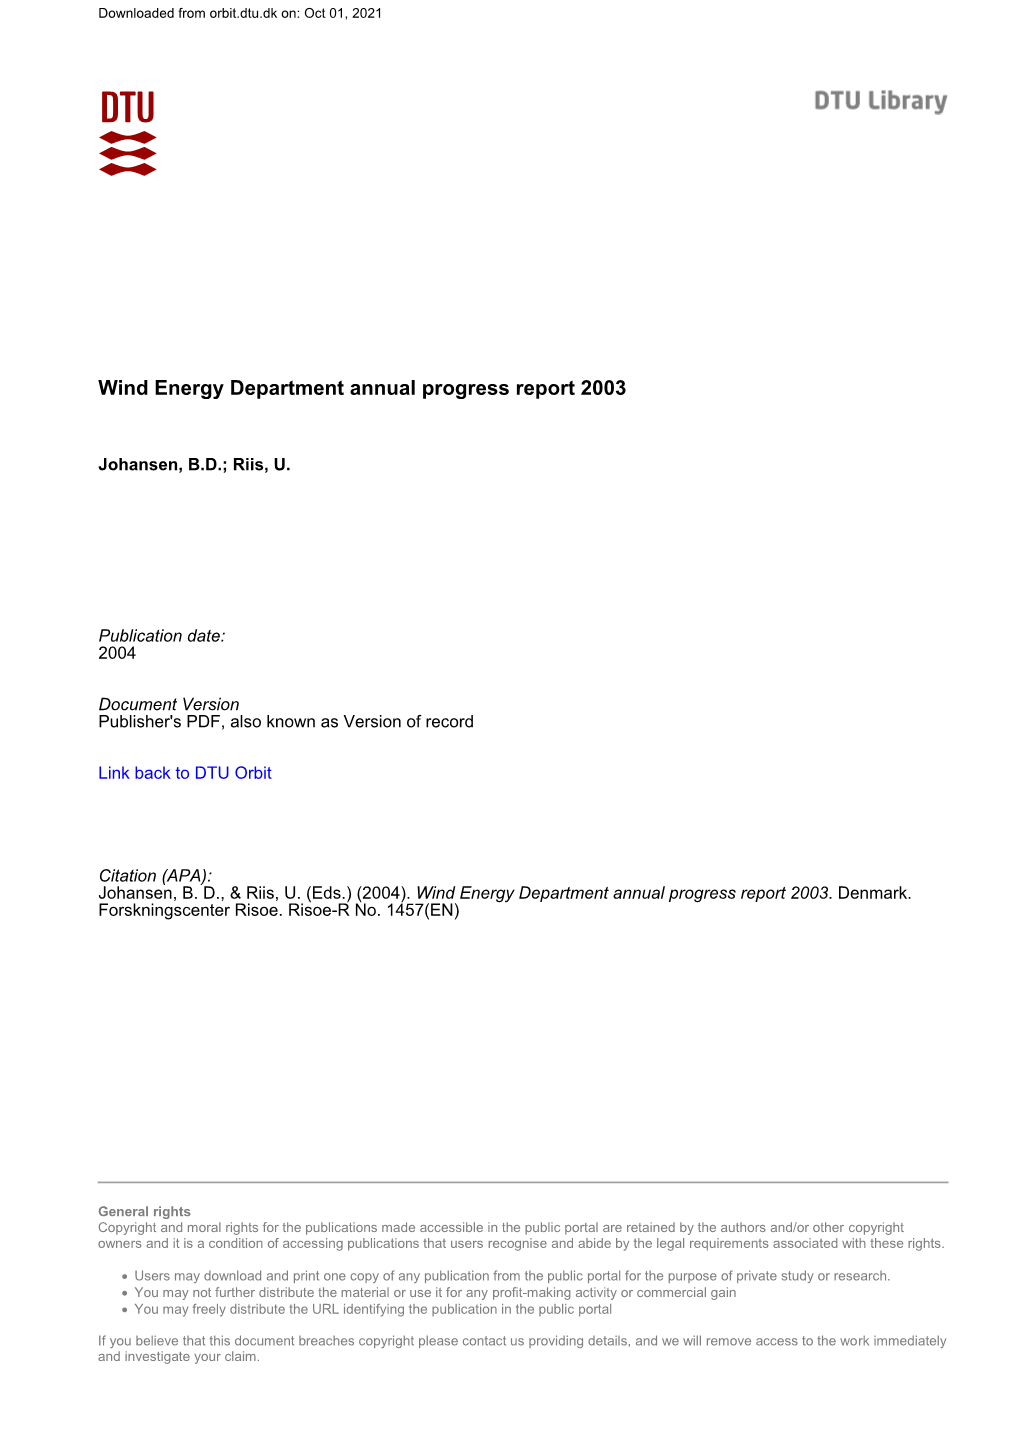 Wind Energy Department Annual Progress Report 2003